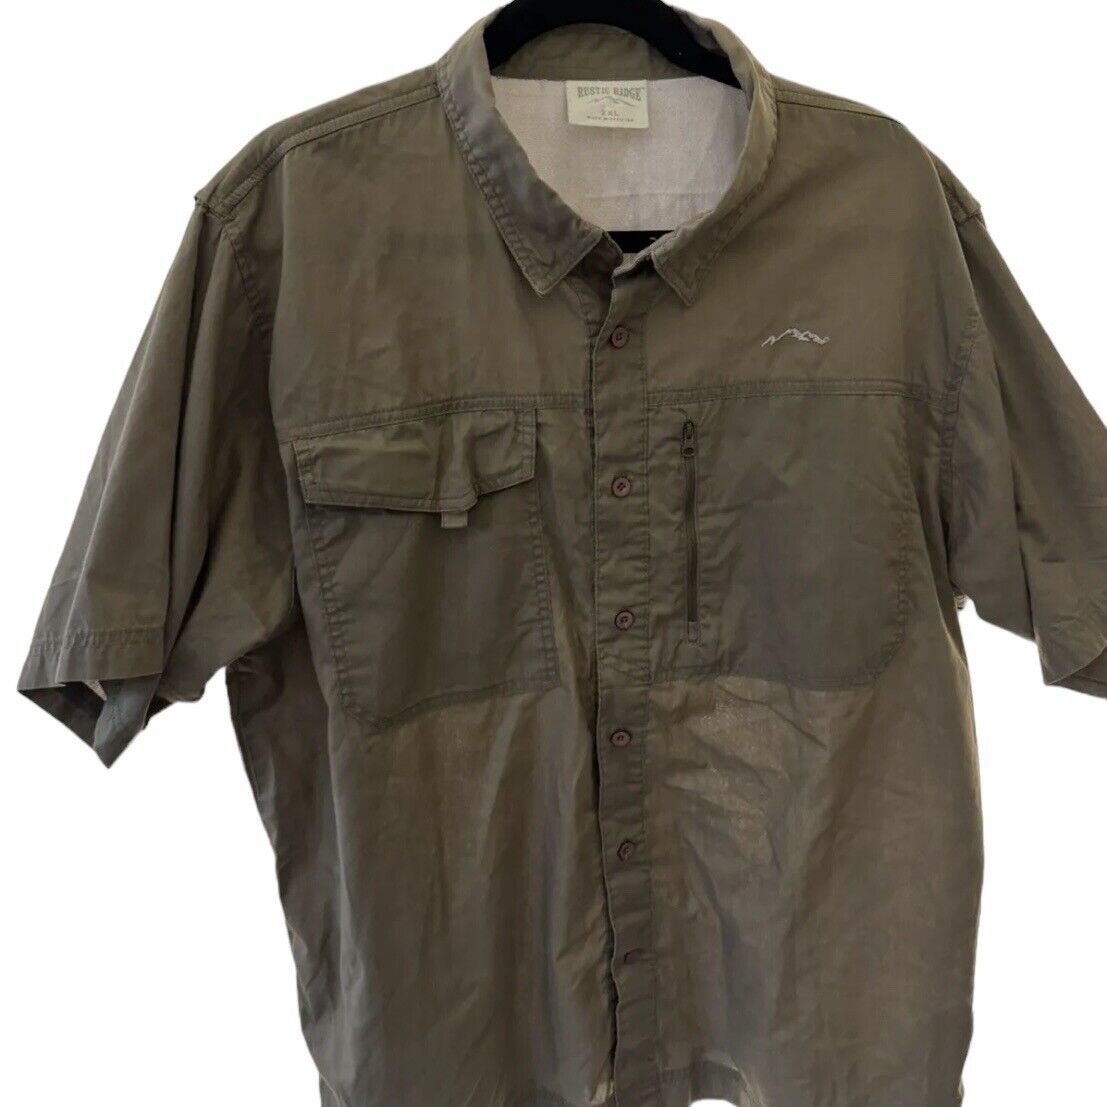 Rustic Ridge Mens XXL Short Sleeve Vented Fishing Shirt